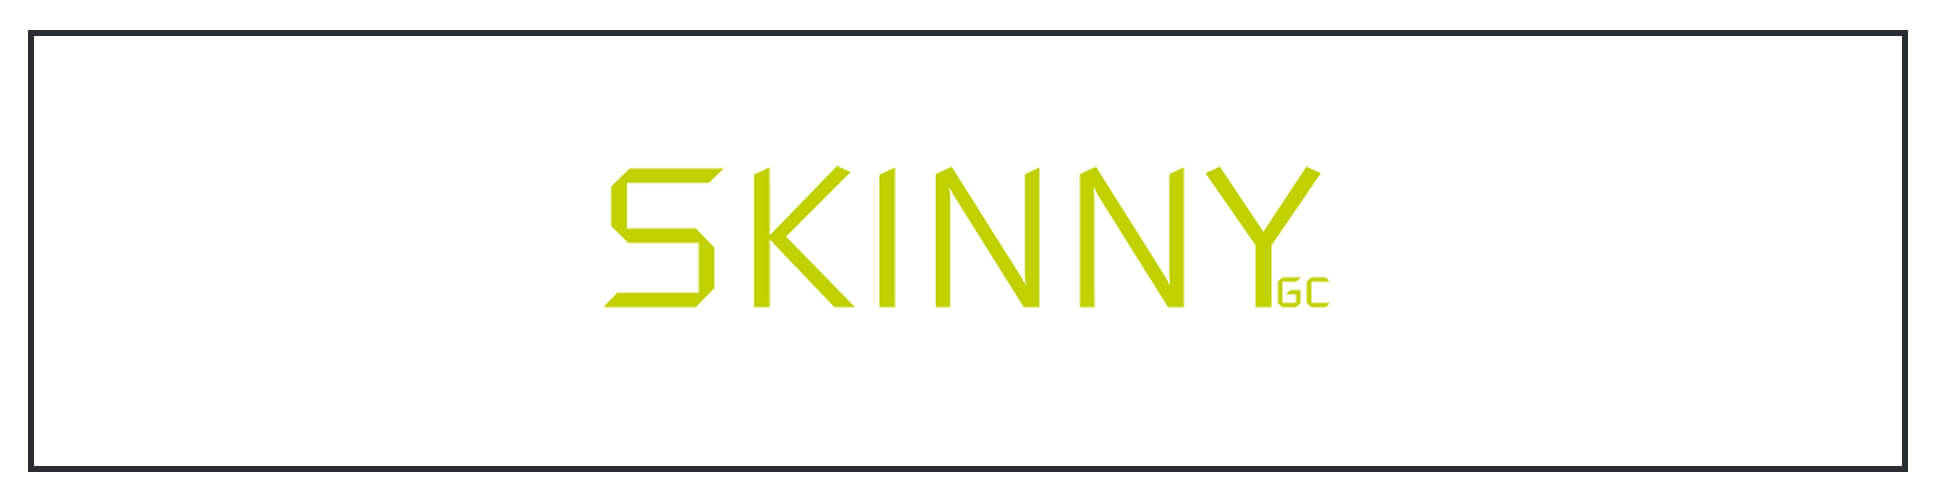 Skinny inc logo design.